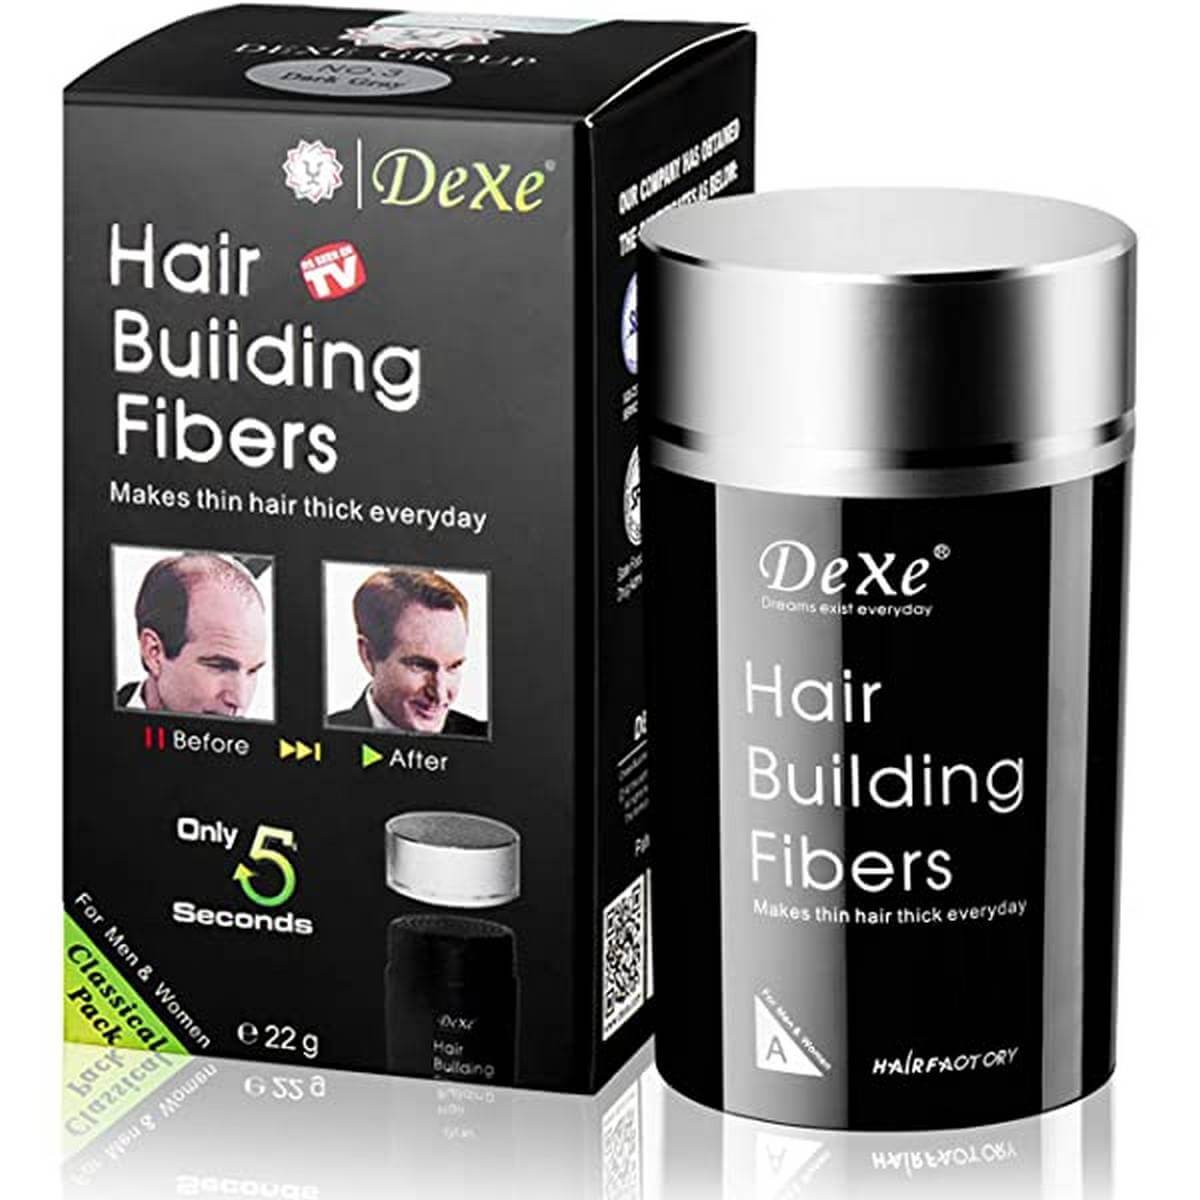 Dexe Hair Building Fibers, 22g